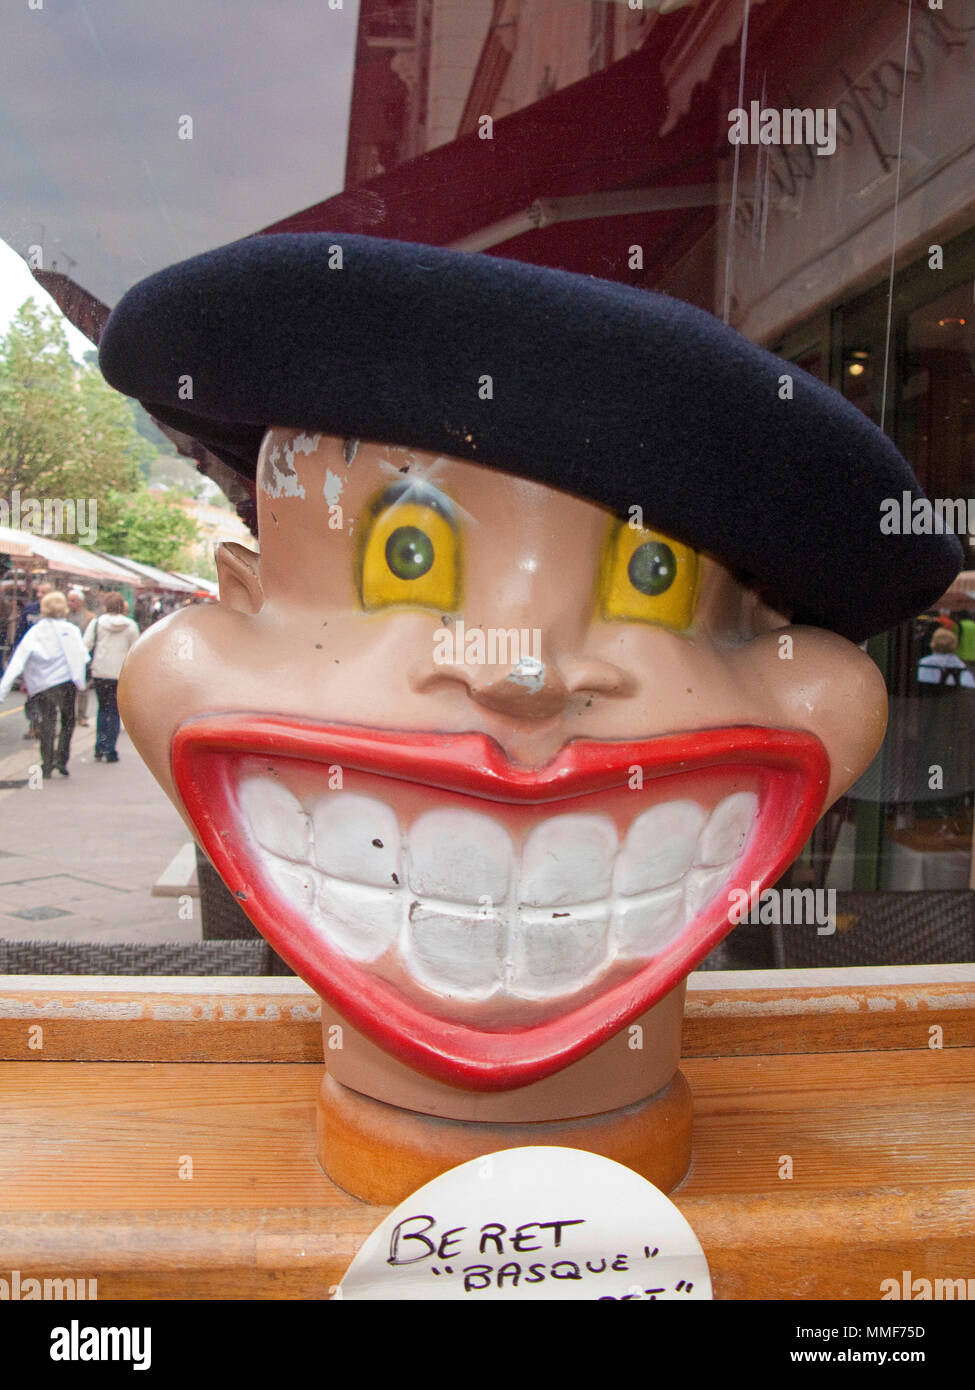 Boina boina vasca, en un cómic sonriente cabeza, Cours Saleya, Niza Côte d'azur, Alpes Marítimos, en el sur de Francia, Francia, Europa Foto de stock